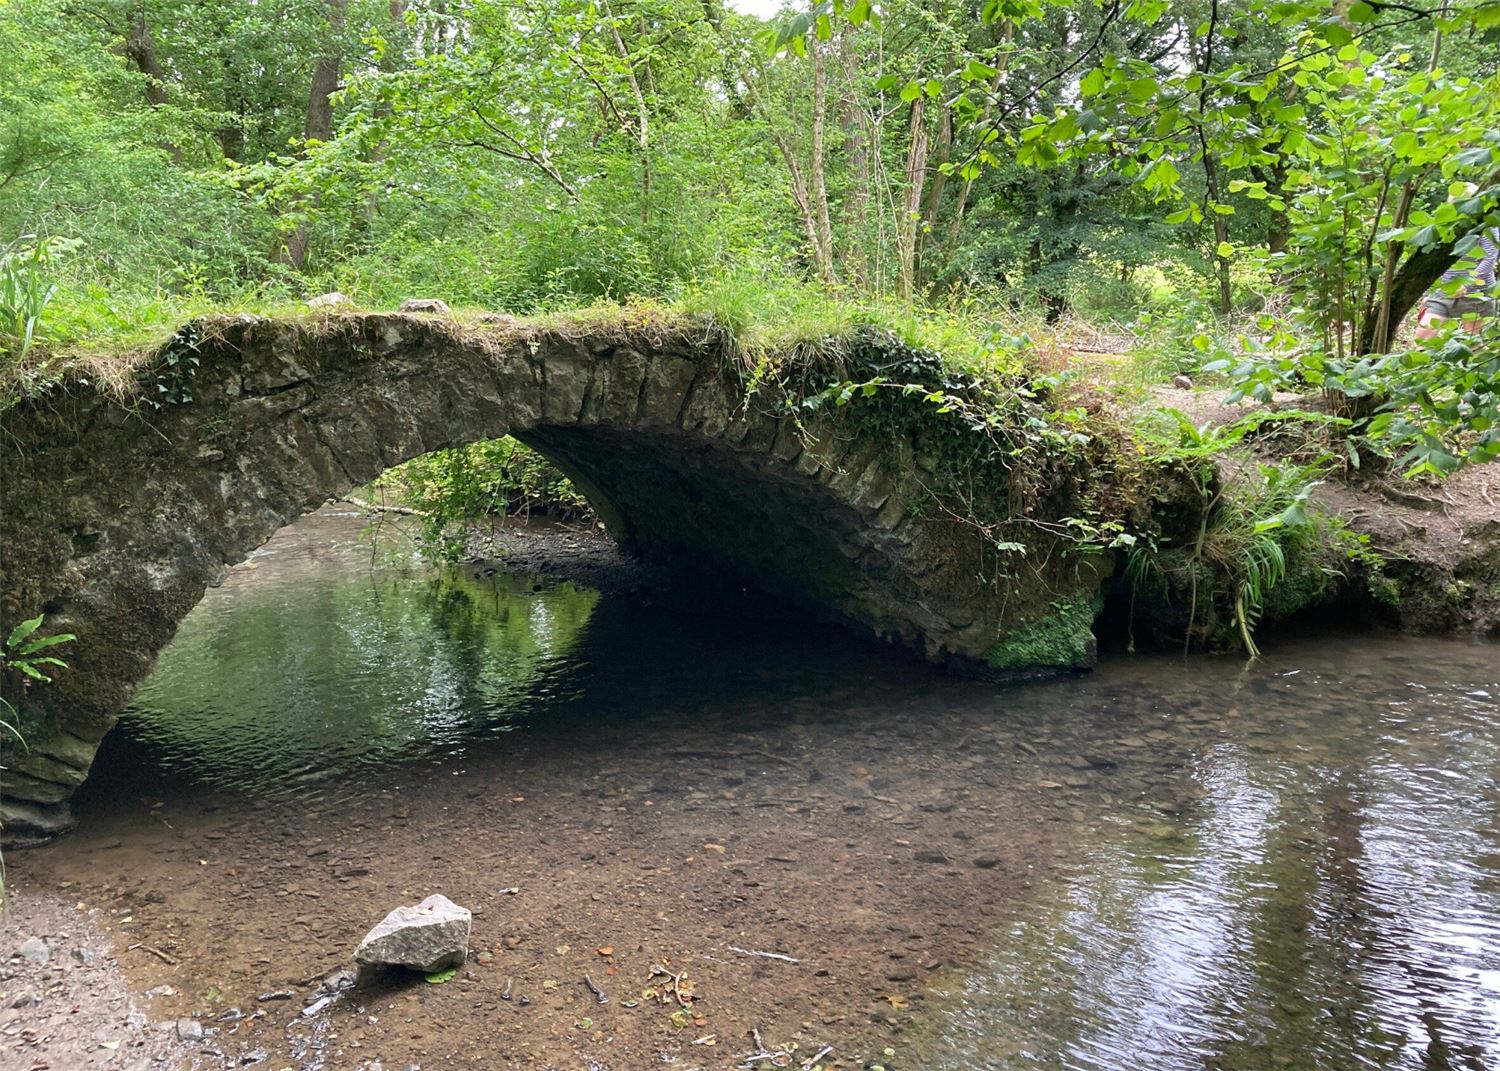 saddleback bridge over stream, relax in the countryside